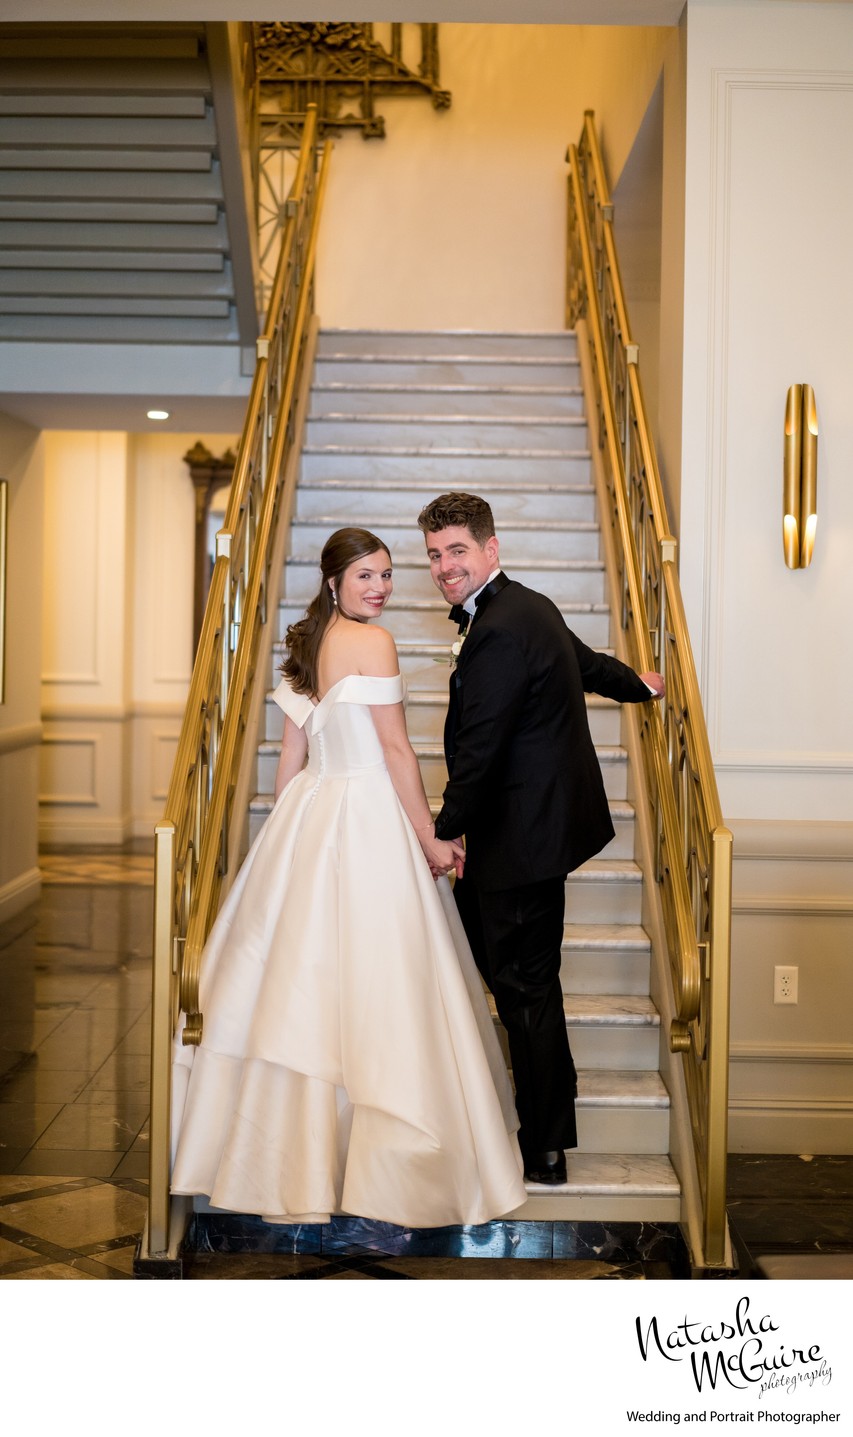 Stairs to mezzanine at Hotel Saint Louis wedding